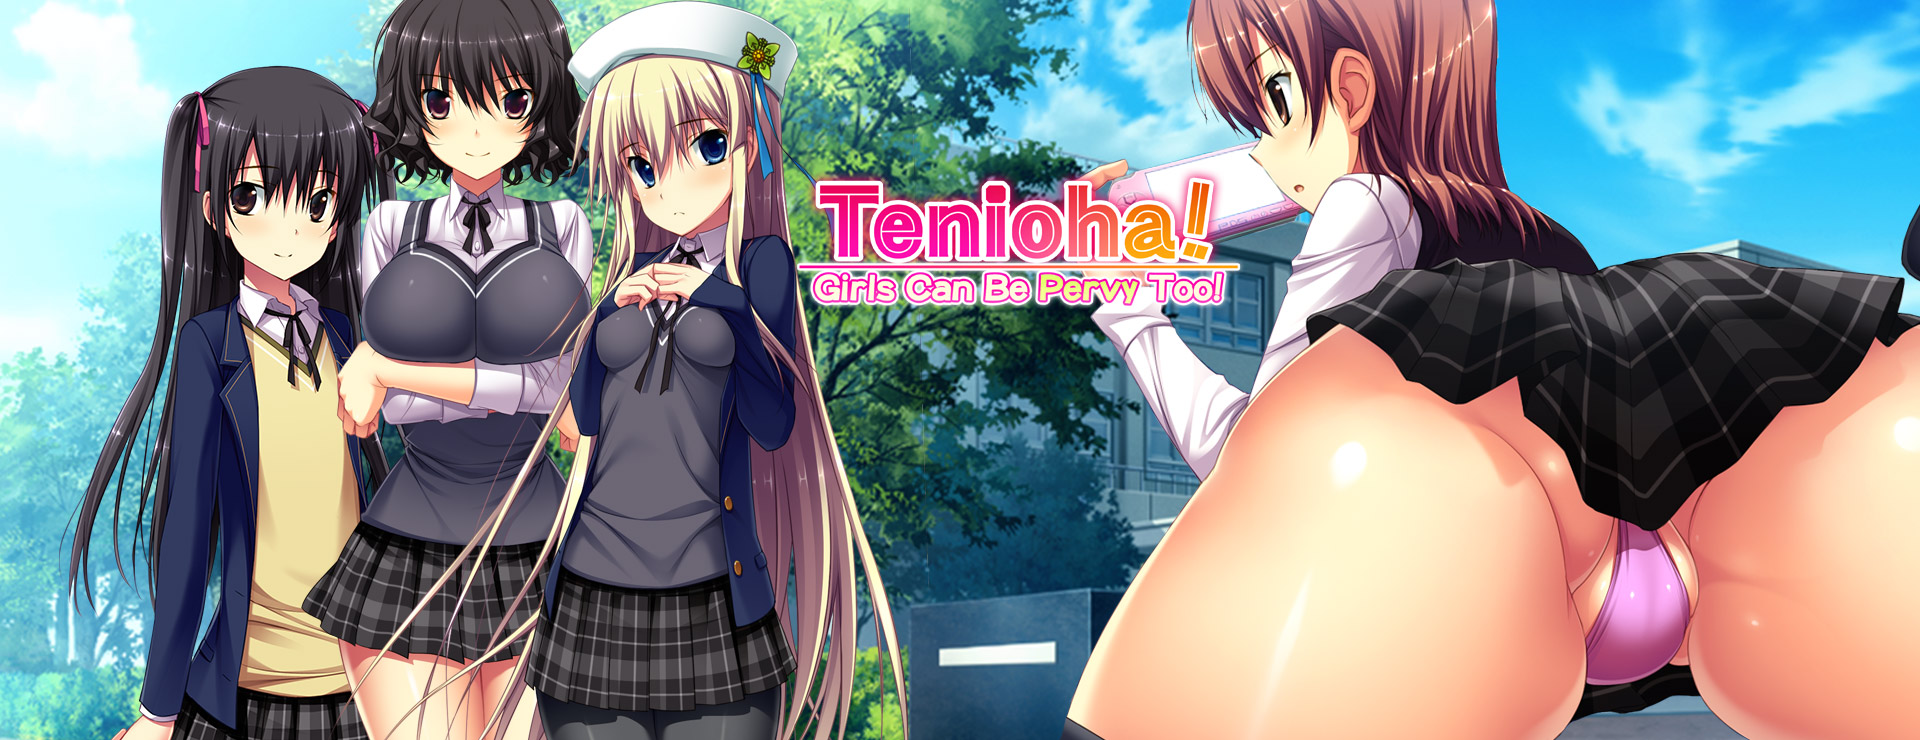 Tenioha! : Girls Can Be Pervy Too! - Japanisches Adventure Spiel